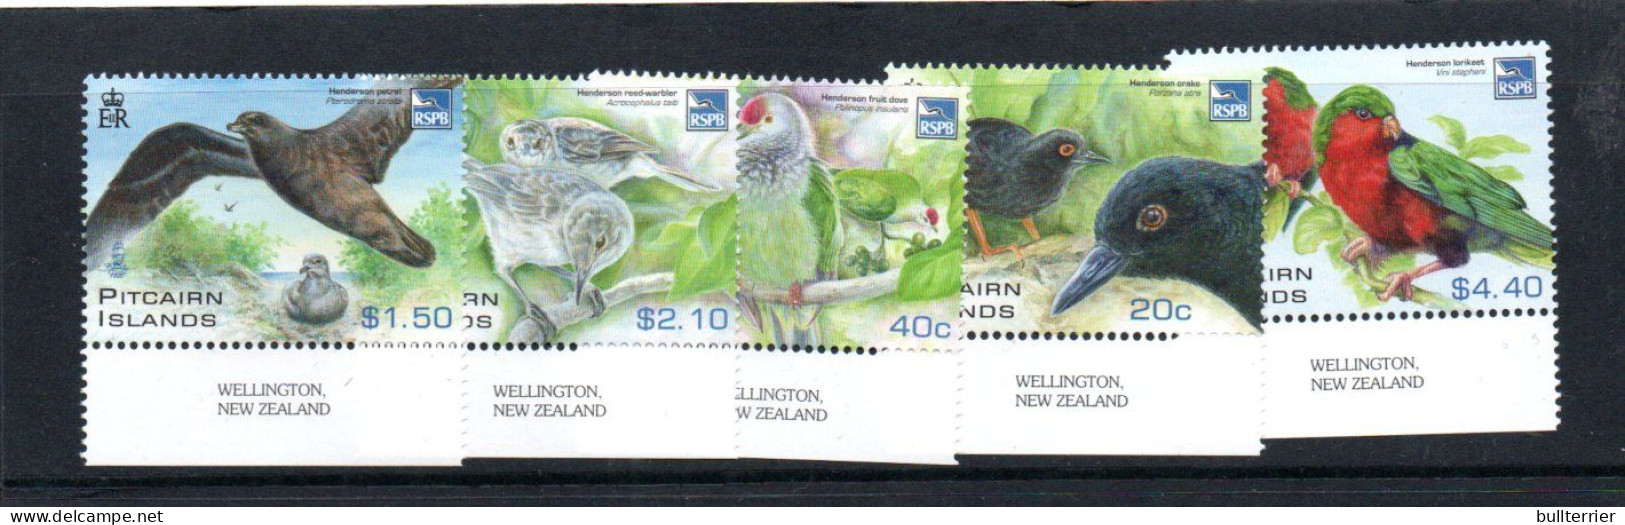 BIRDS -Pitcairn Islands - 2011- Henderson IslandRSPB Birds Set Of 5 Mint Never Hinged, SG Cat £15.25 - Pigeons & Columbiformes